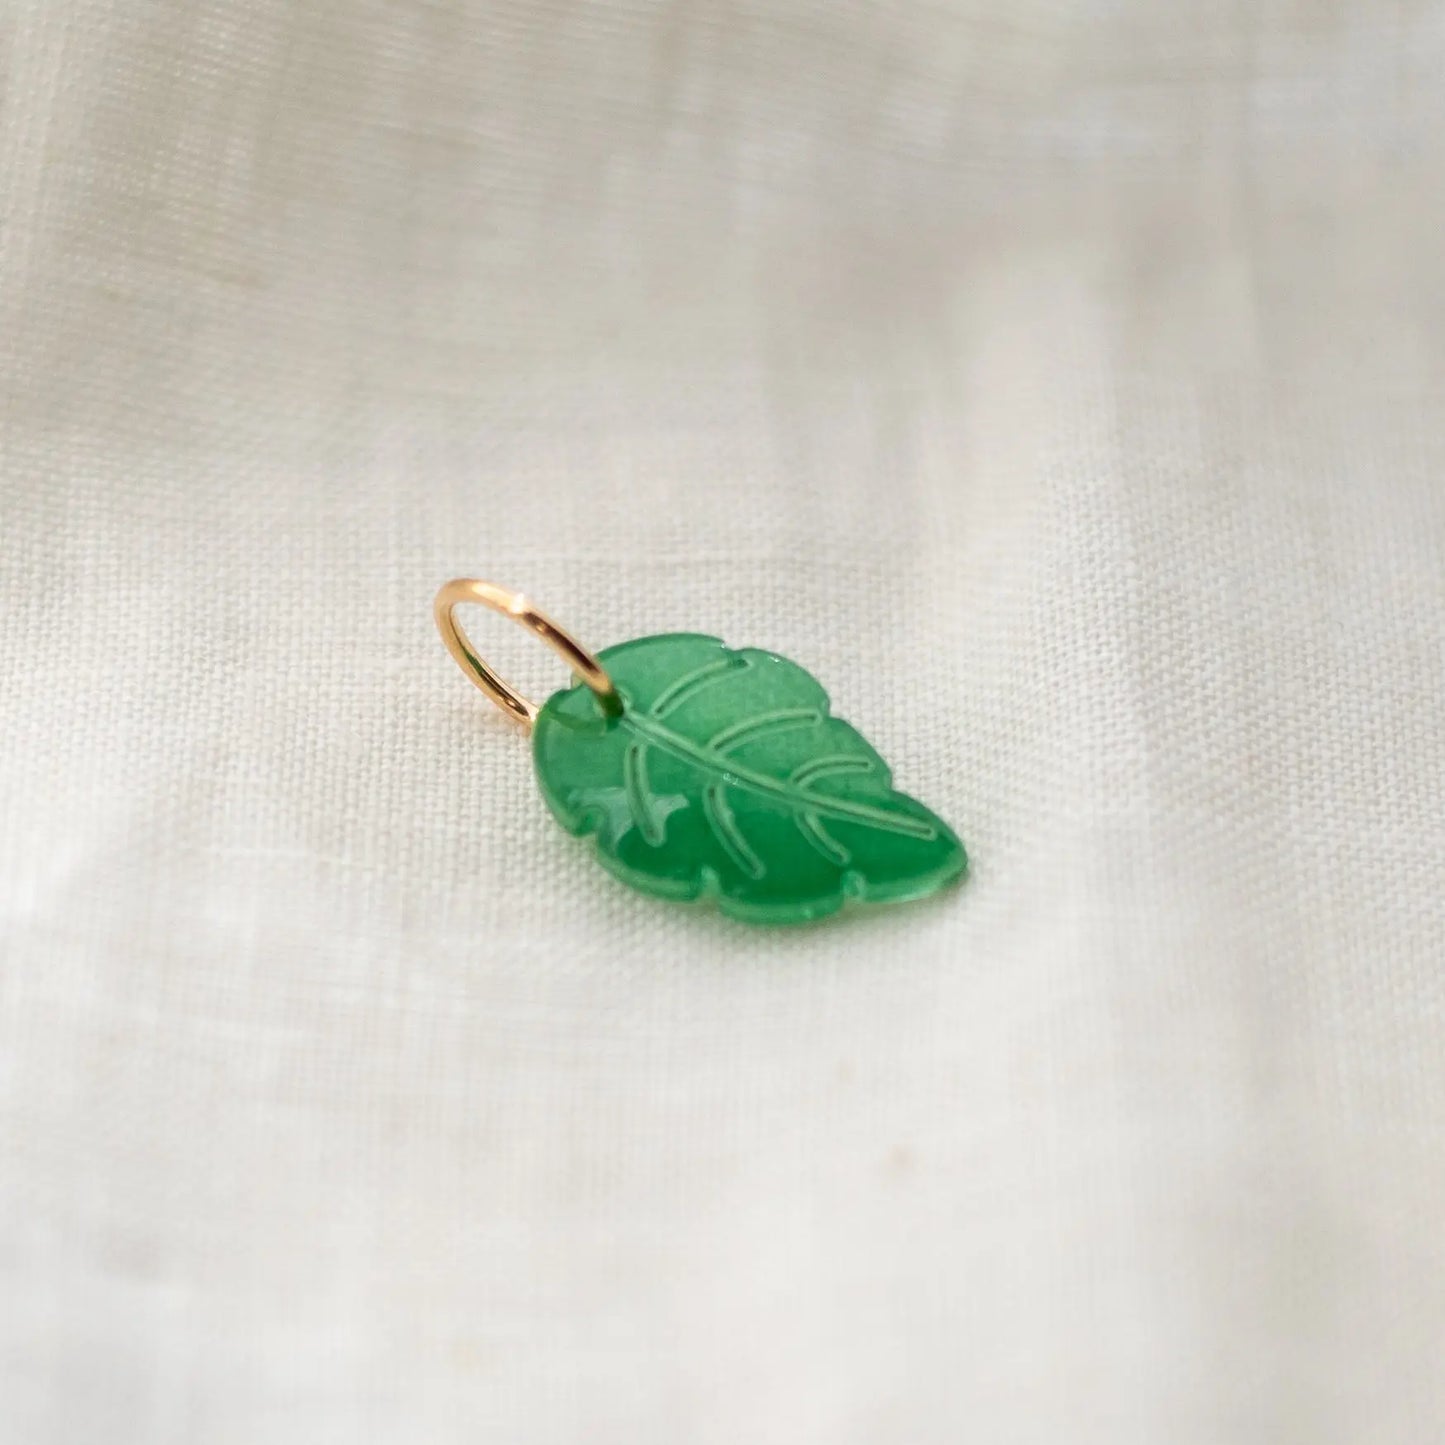 Glass leaf - stitchmarker